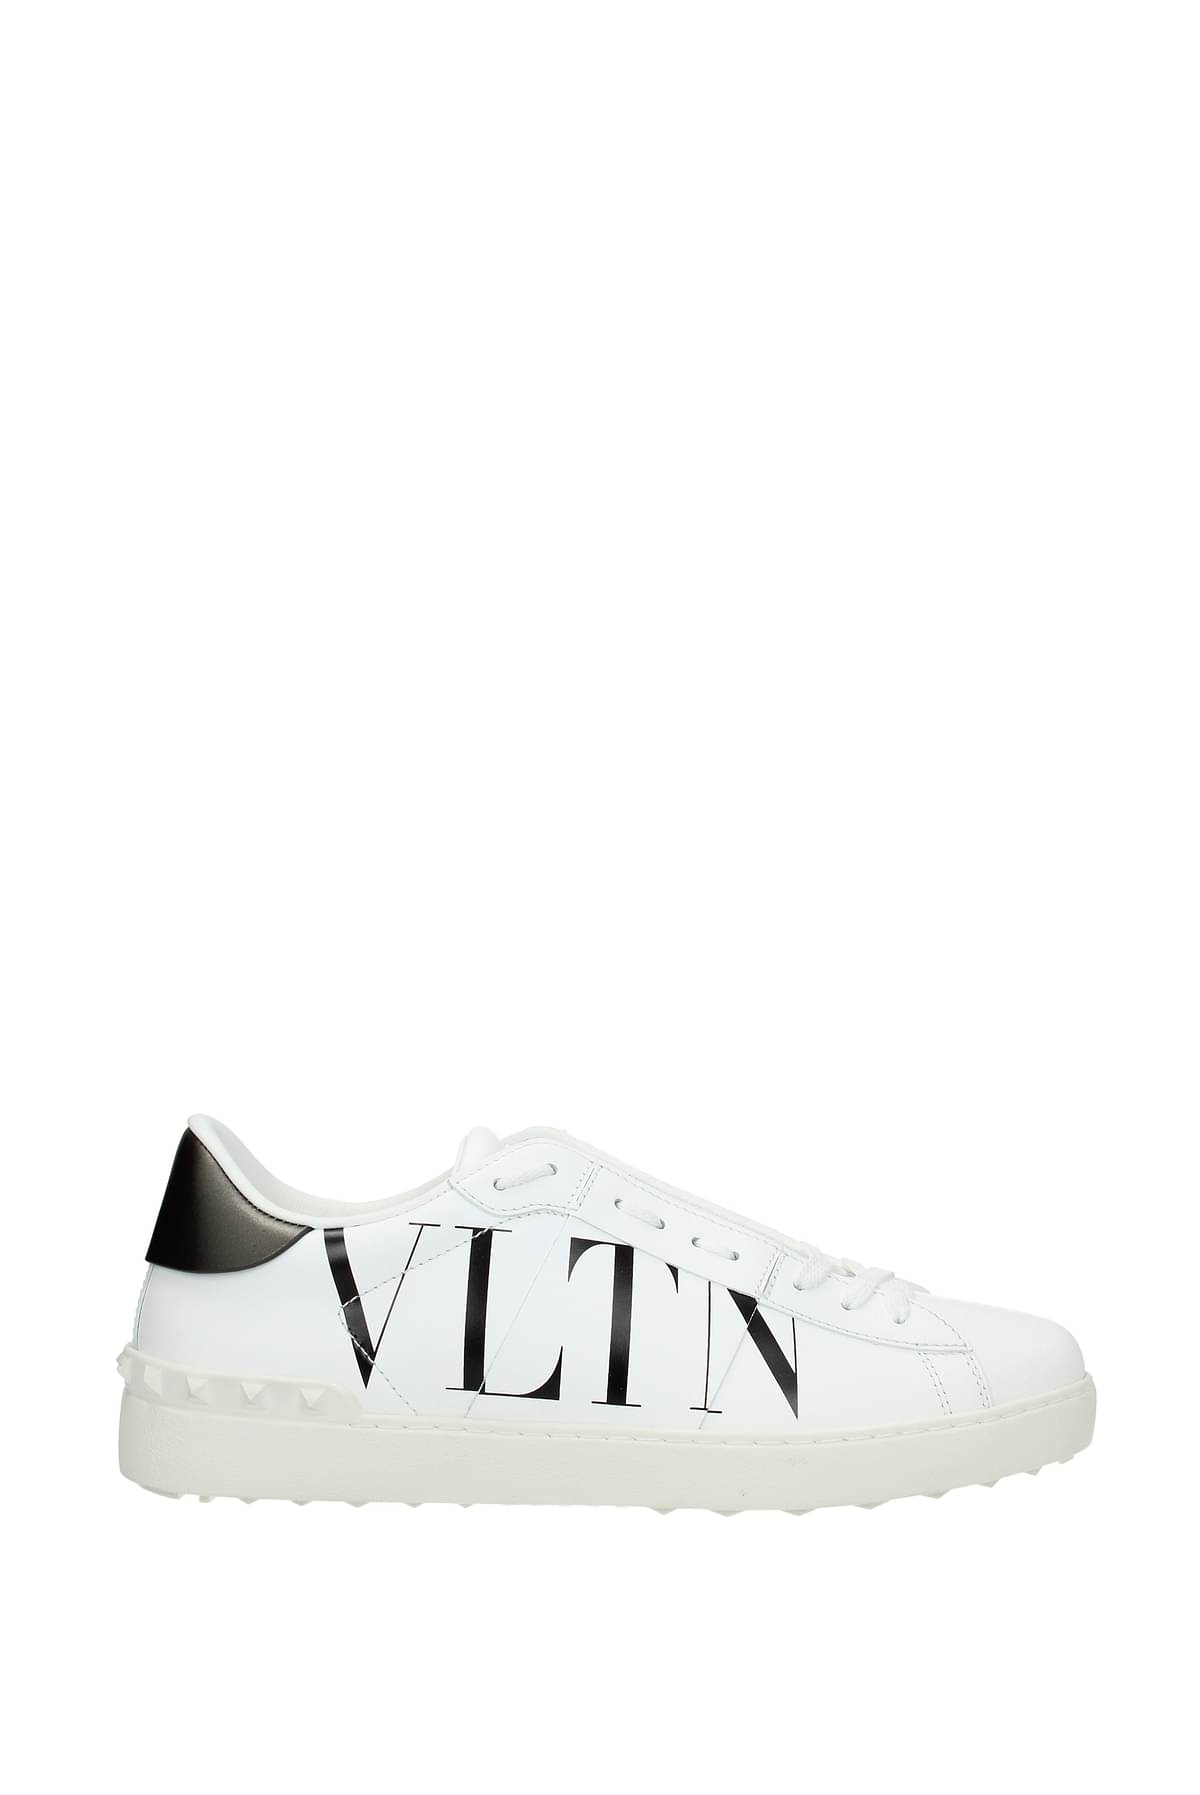 Valentino Garavani Sneakers S0830PSTA01 Leather White Dark